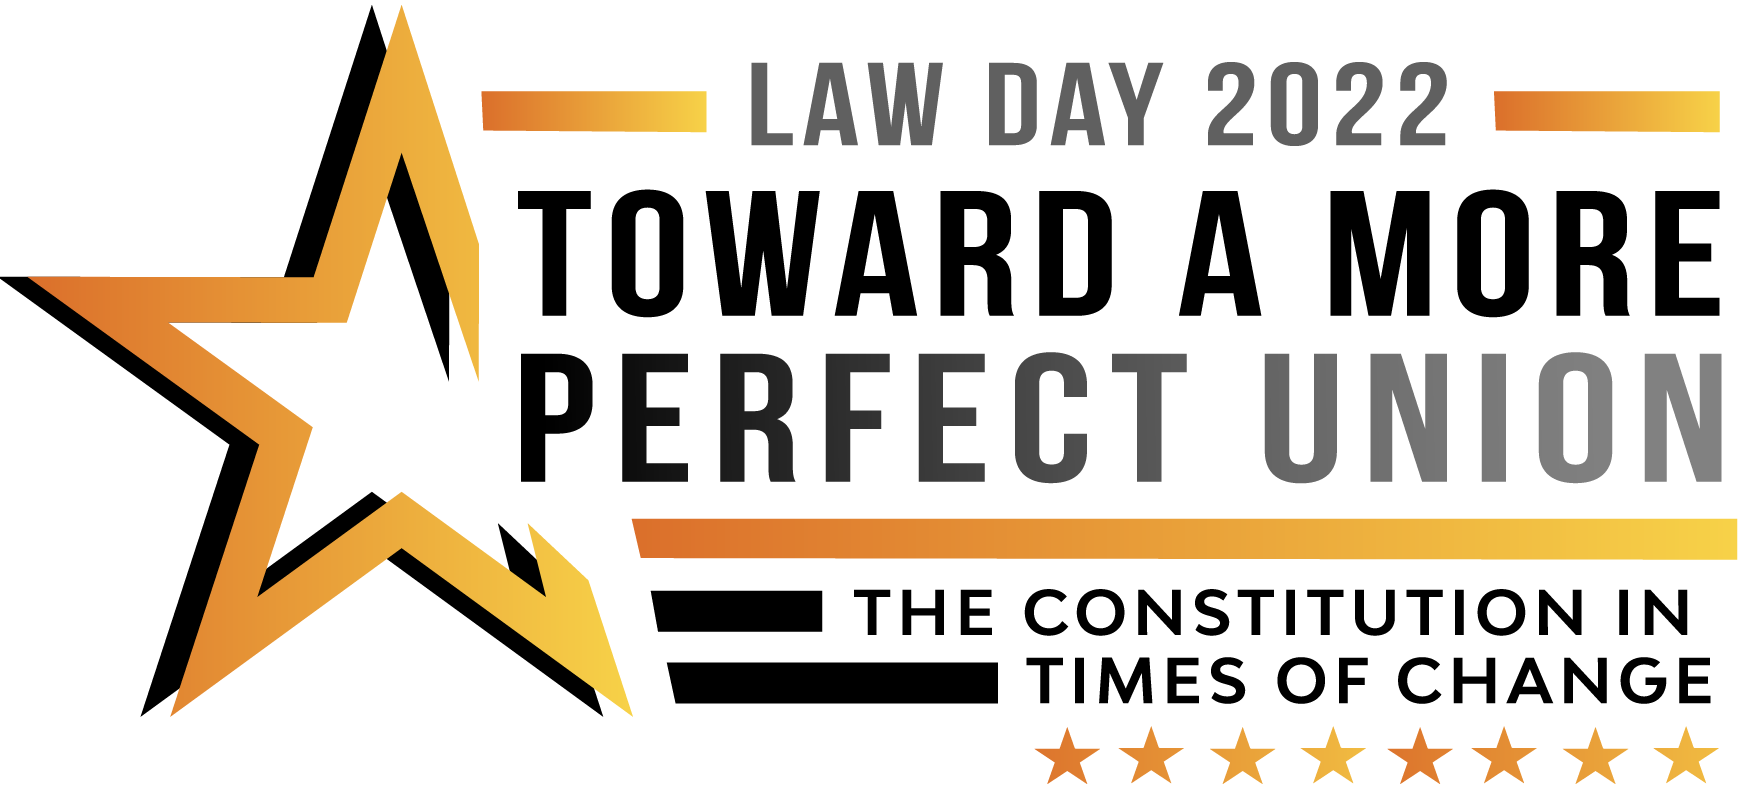 Law Day 2022 logo